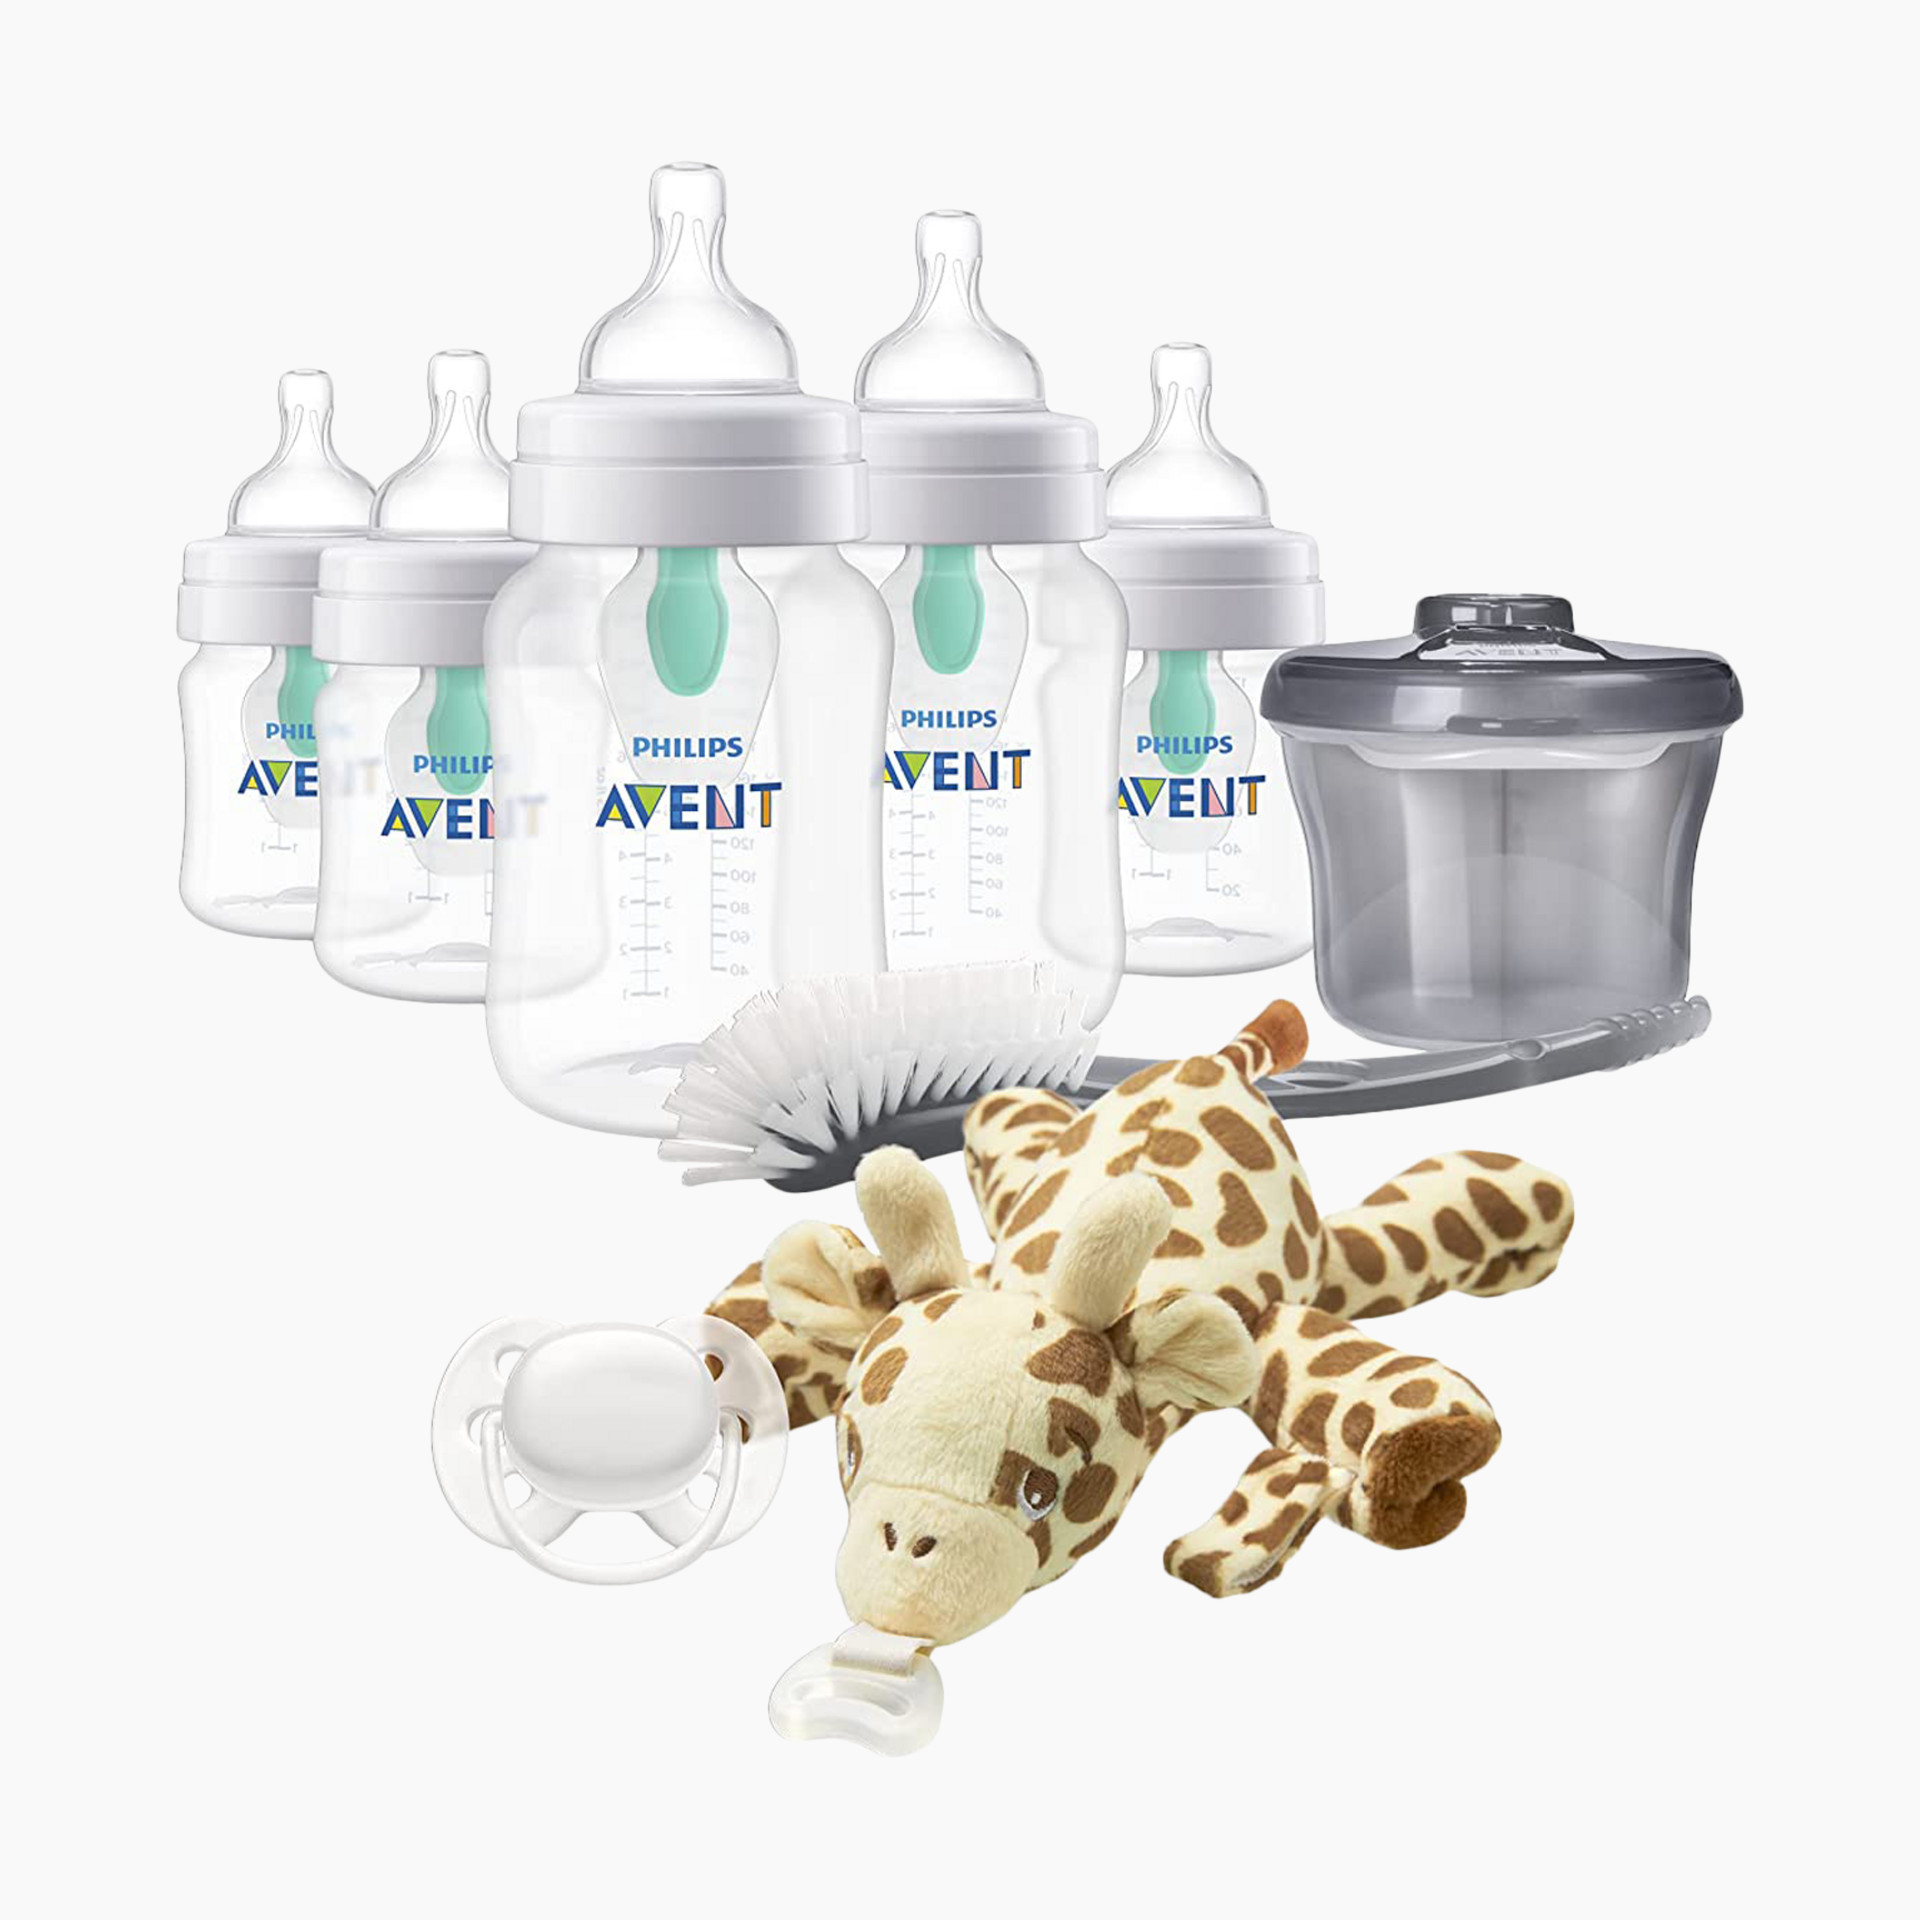 Baby Set, Parent's Choice 3 Pk Bottles, Avent